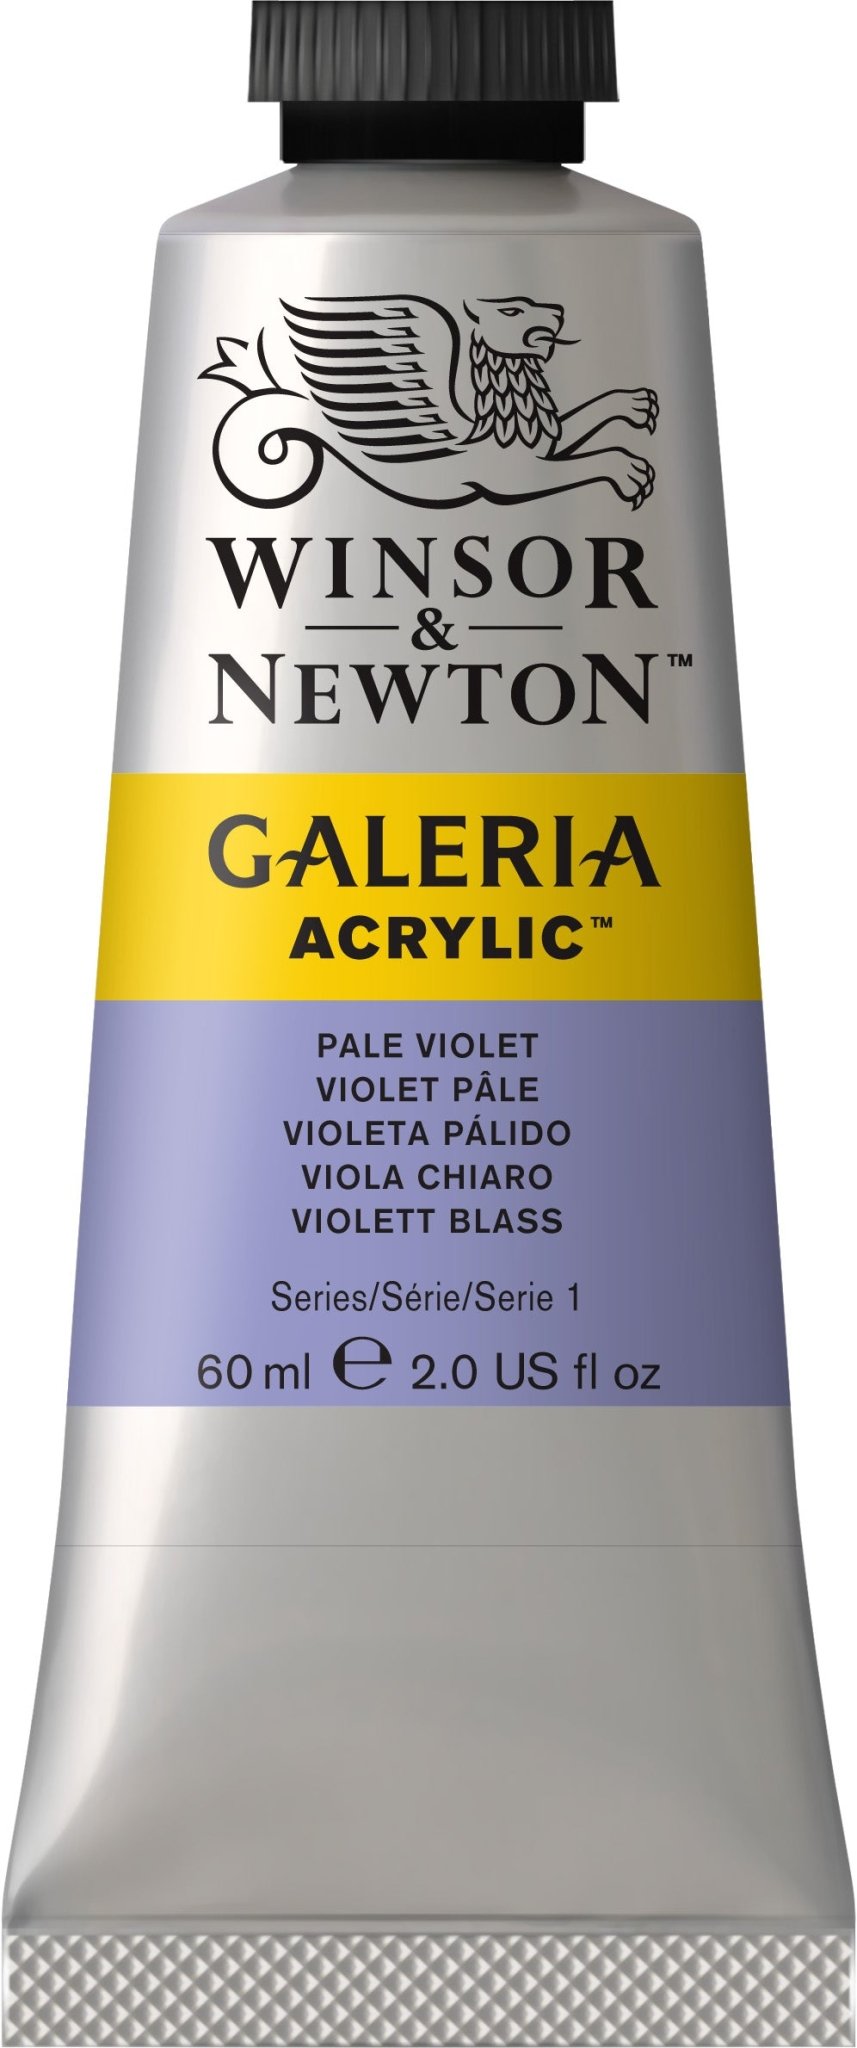 W & N Galeria Acrylic 60ml Pale Violet - theartshop.com.au